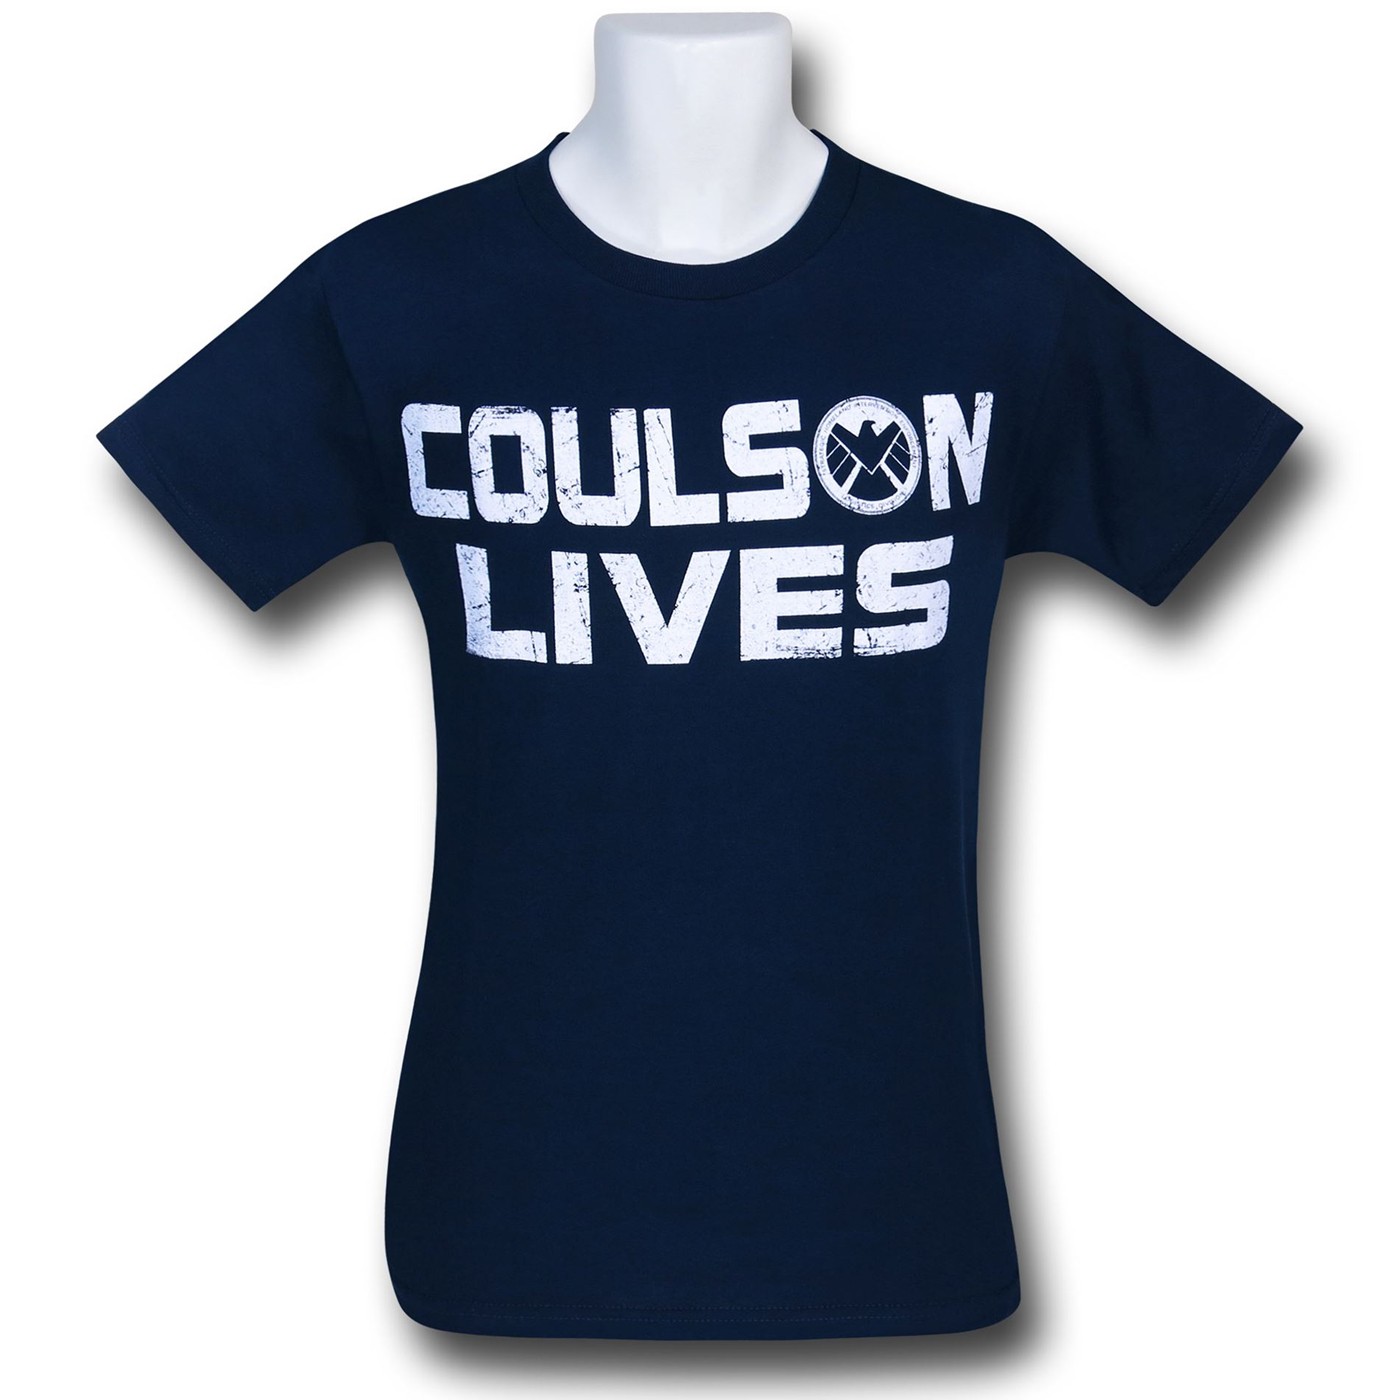 SHIELD Coulson Lives Navy T-Shirt